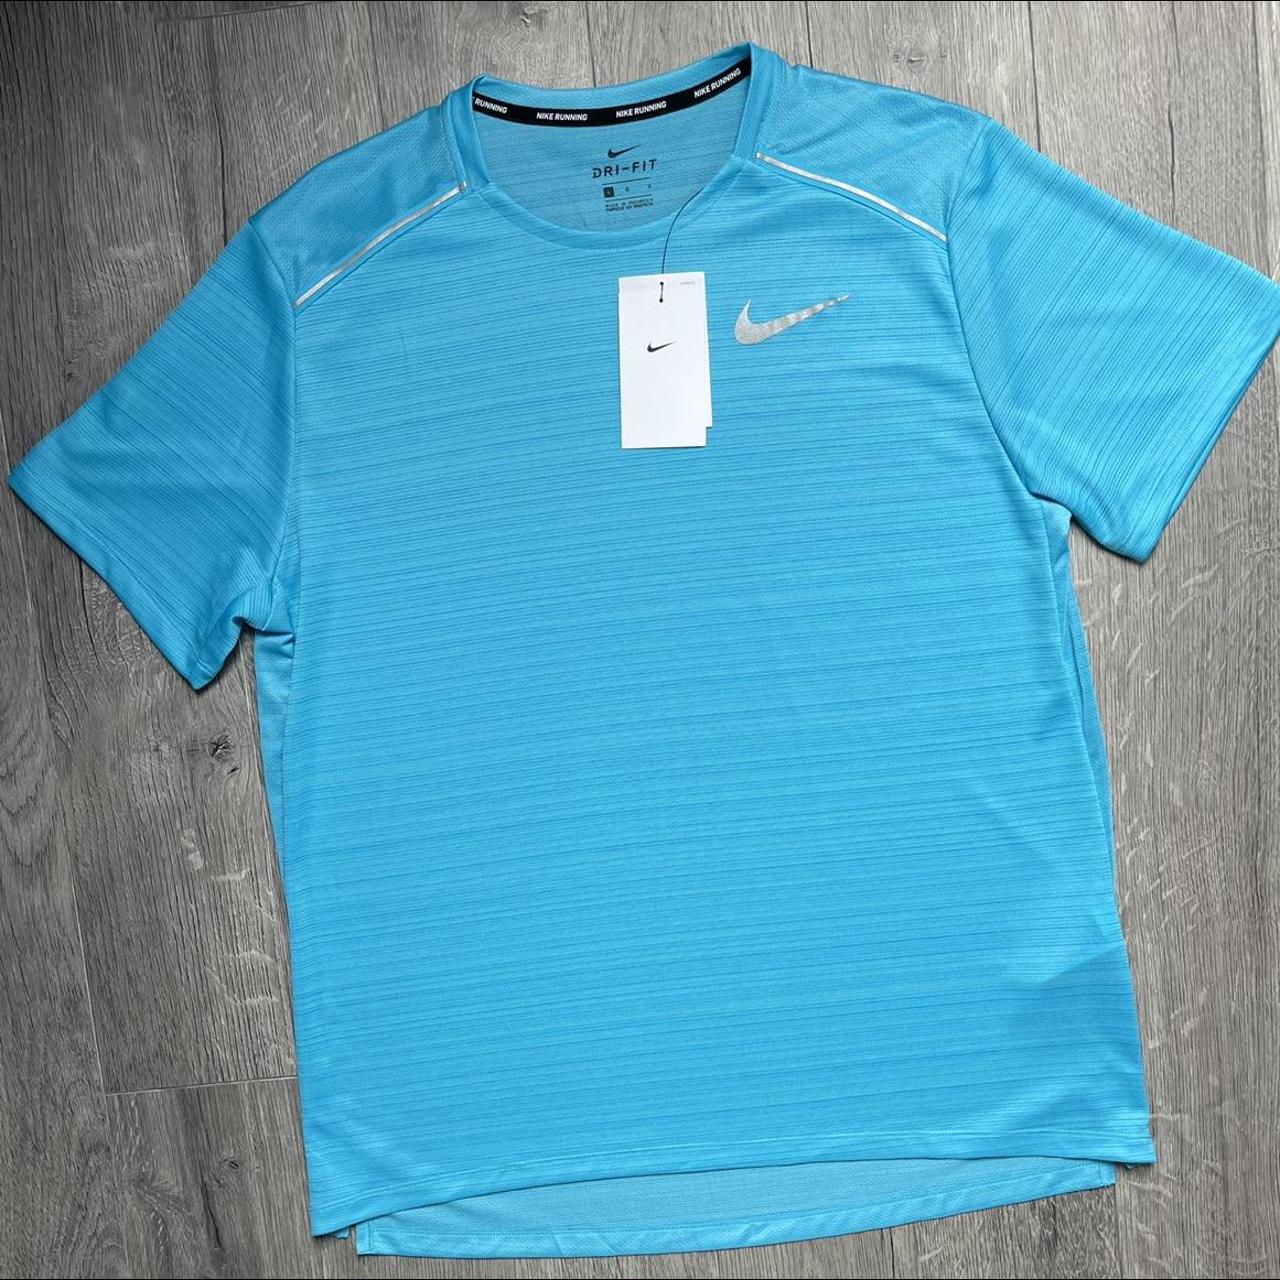 Nike Men's Blue T-shirt | Depop